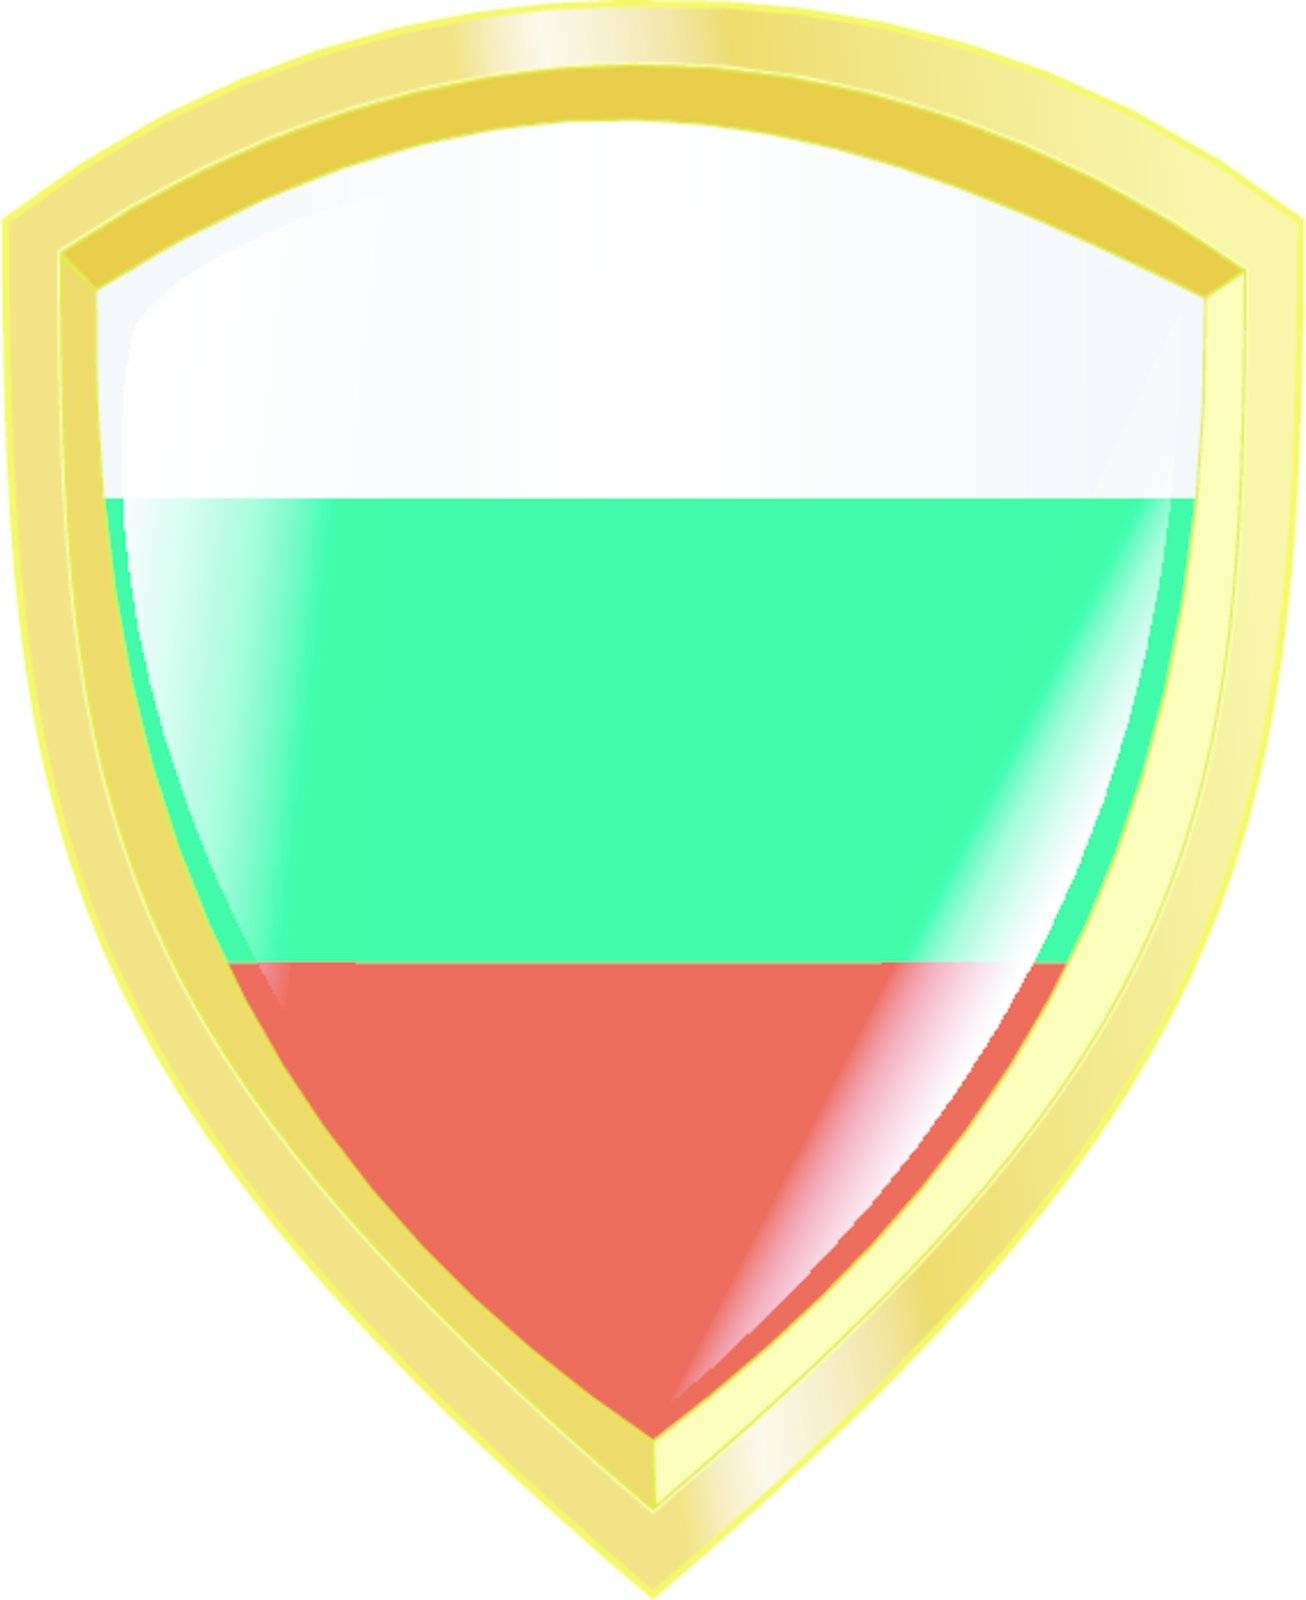 emblem of Bulgaria by Perysty